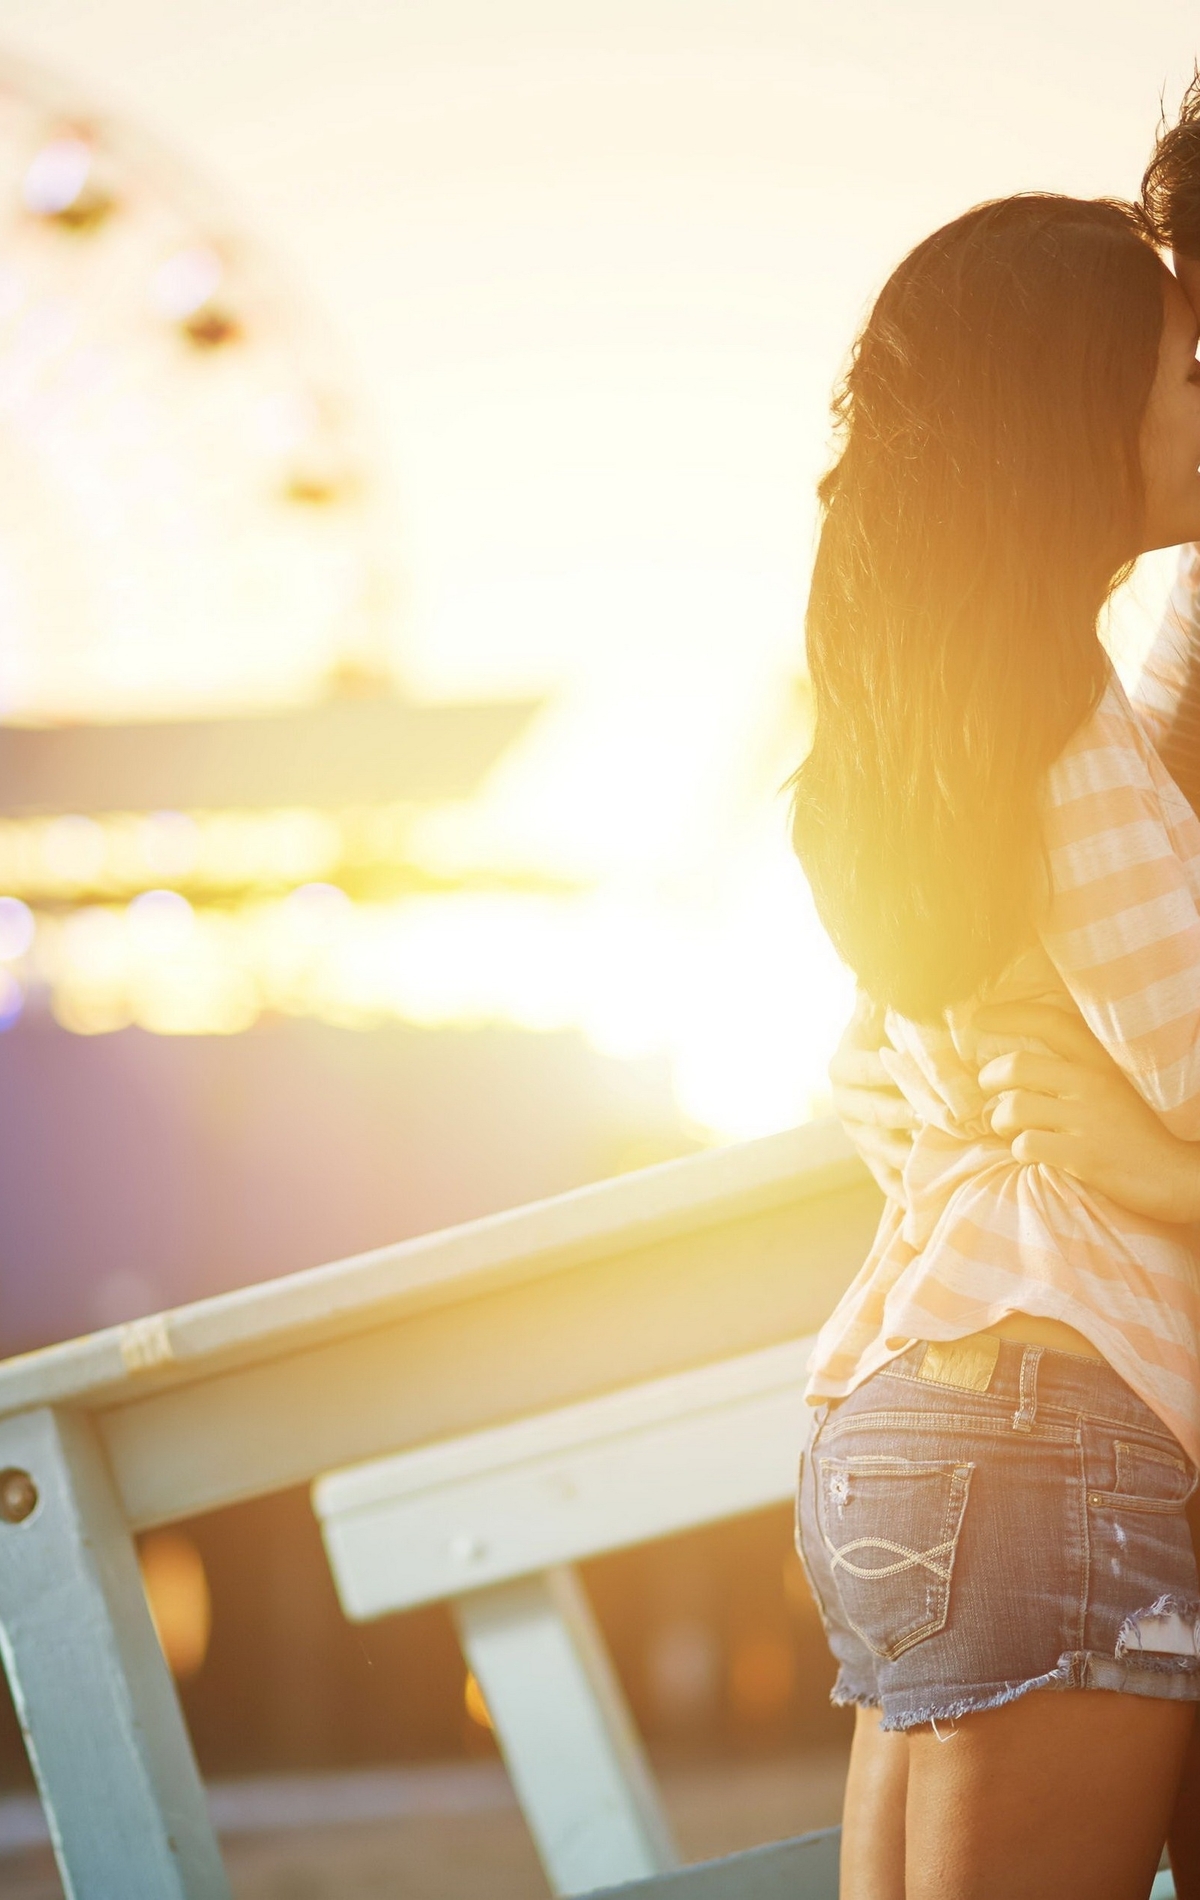 Image: Couple, girl, guy, hug, love, park, rendezvous, smile, mood